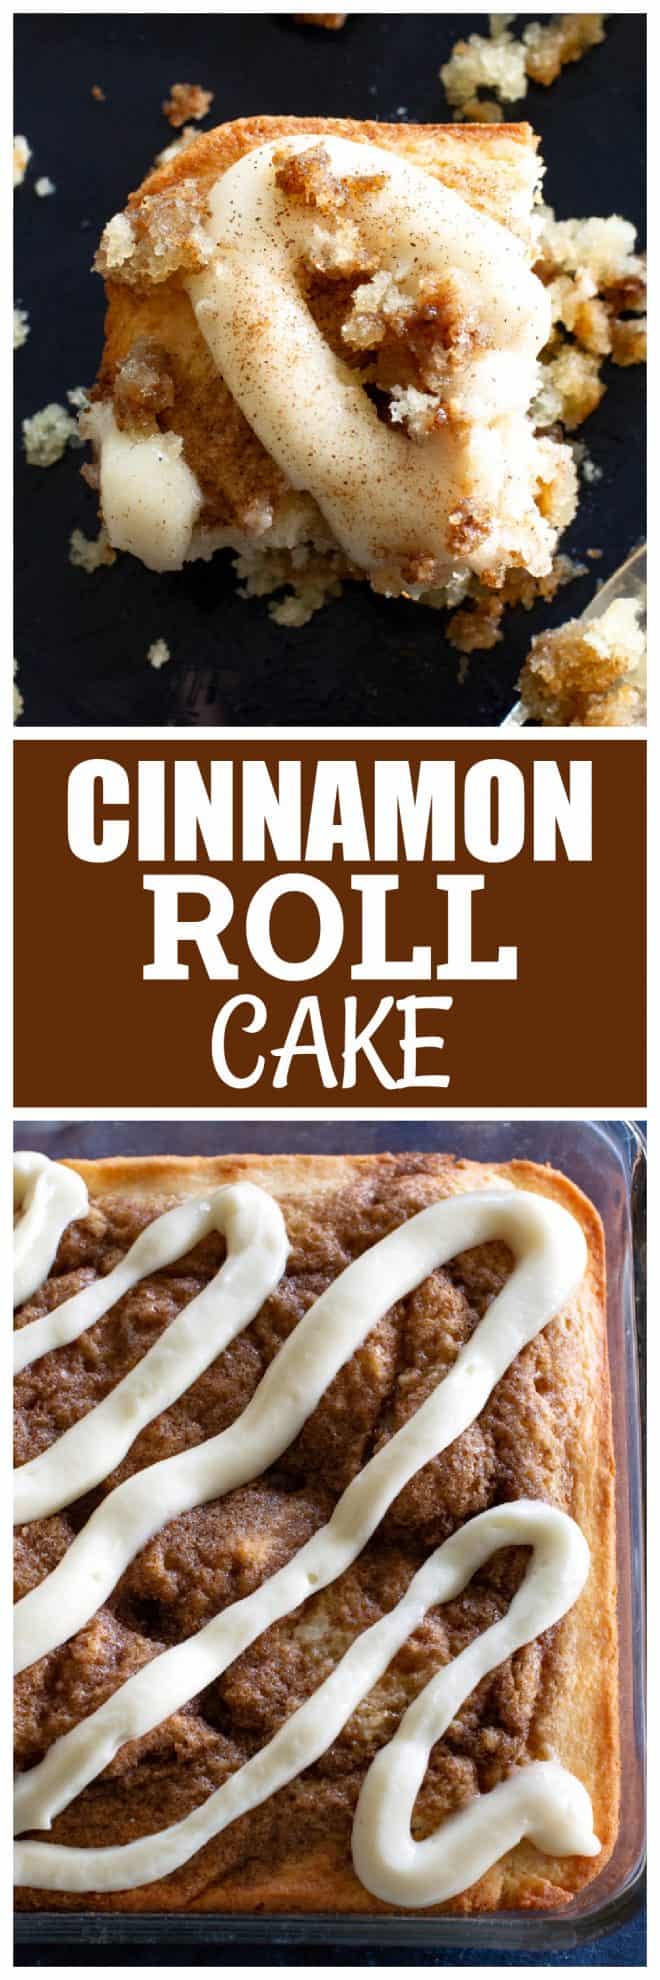 cinnamon roll cake